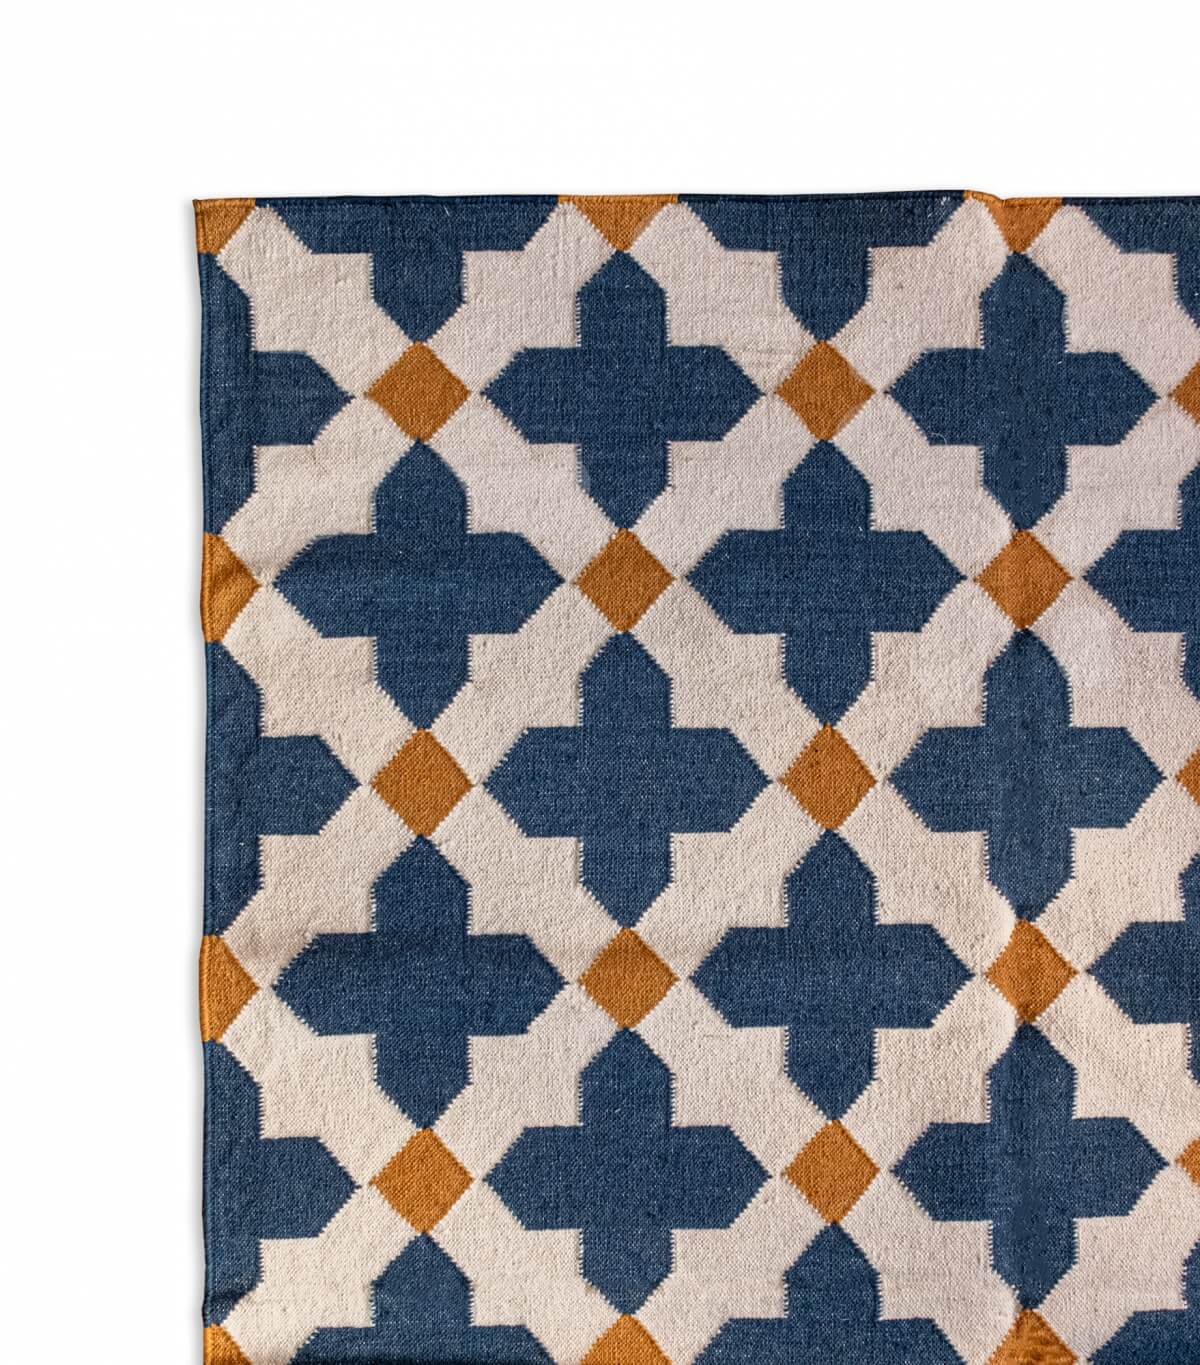 Wool carpet 47x71 inches - blue